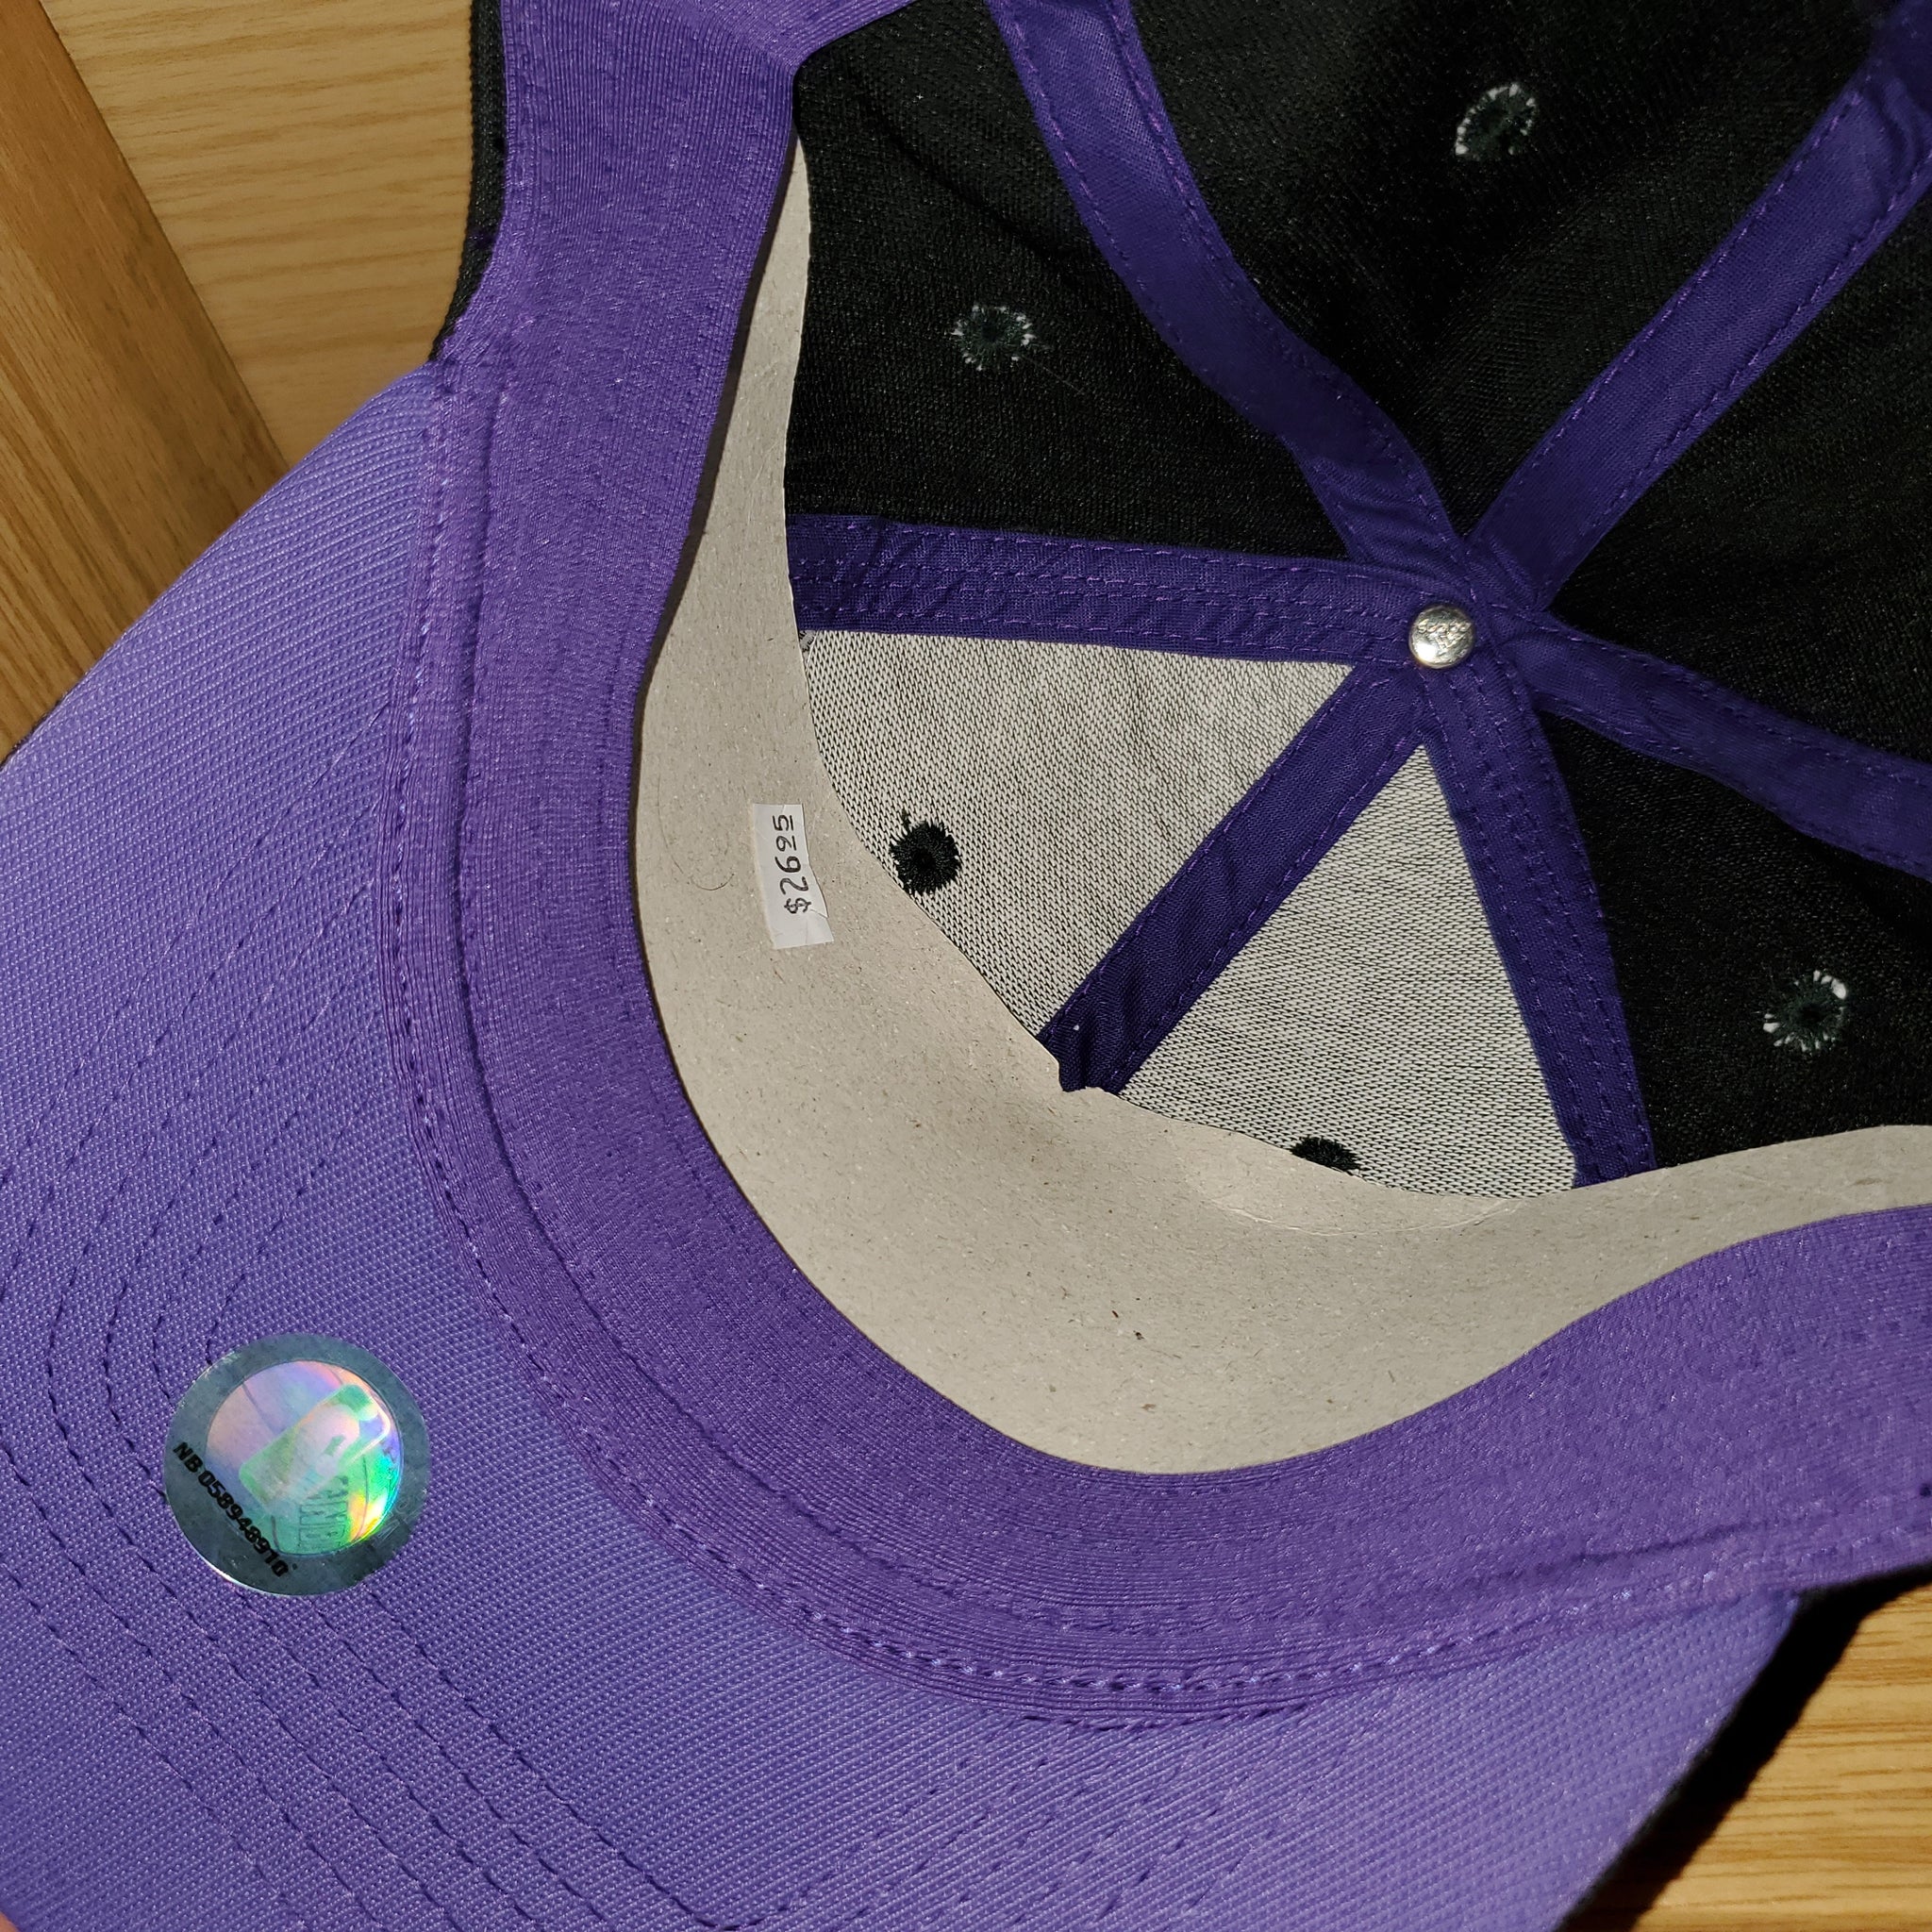 Lot of 10 Sacramento Kings Hats NBA Adidas Logo Unstructured Strapback Hat  NEW